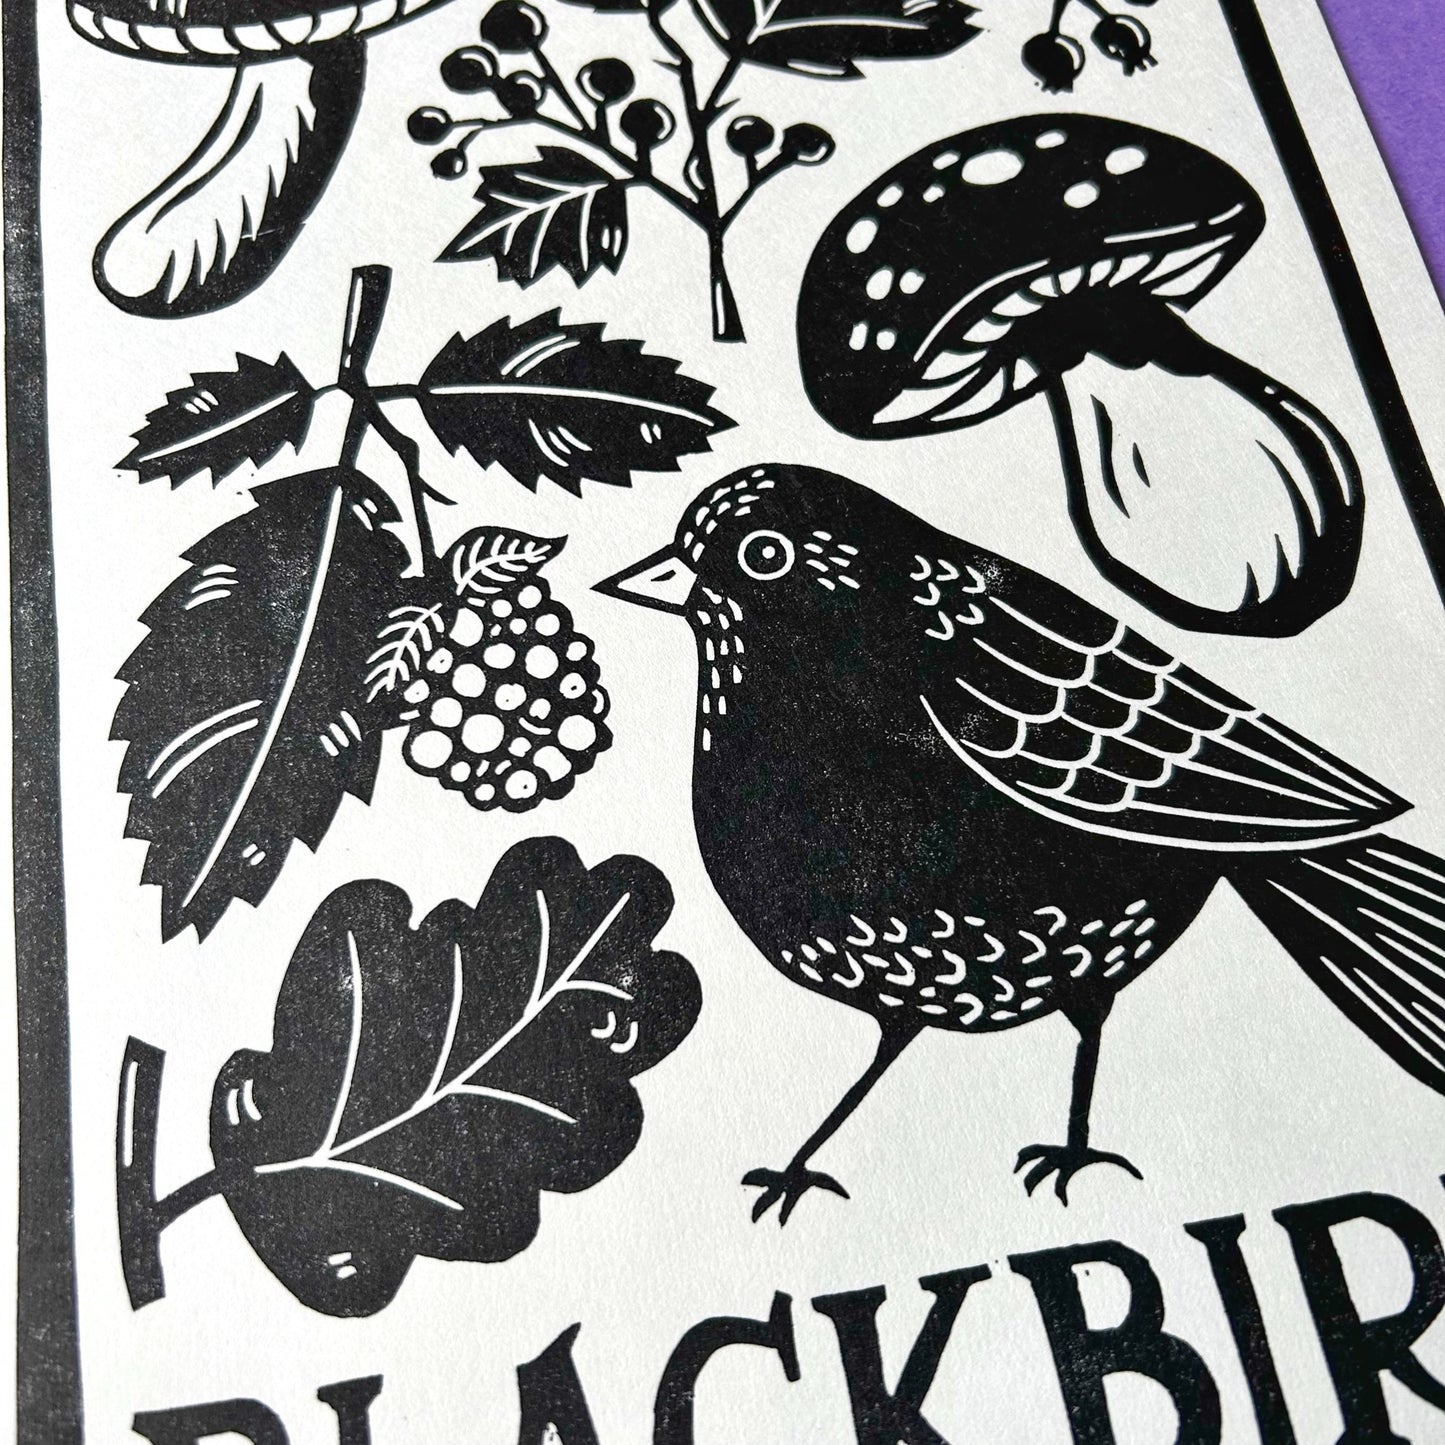 Blackbird Lino Print